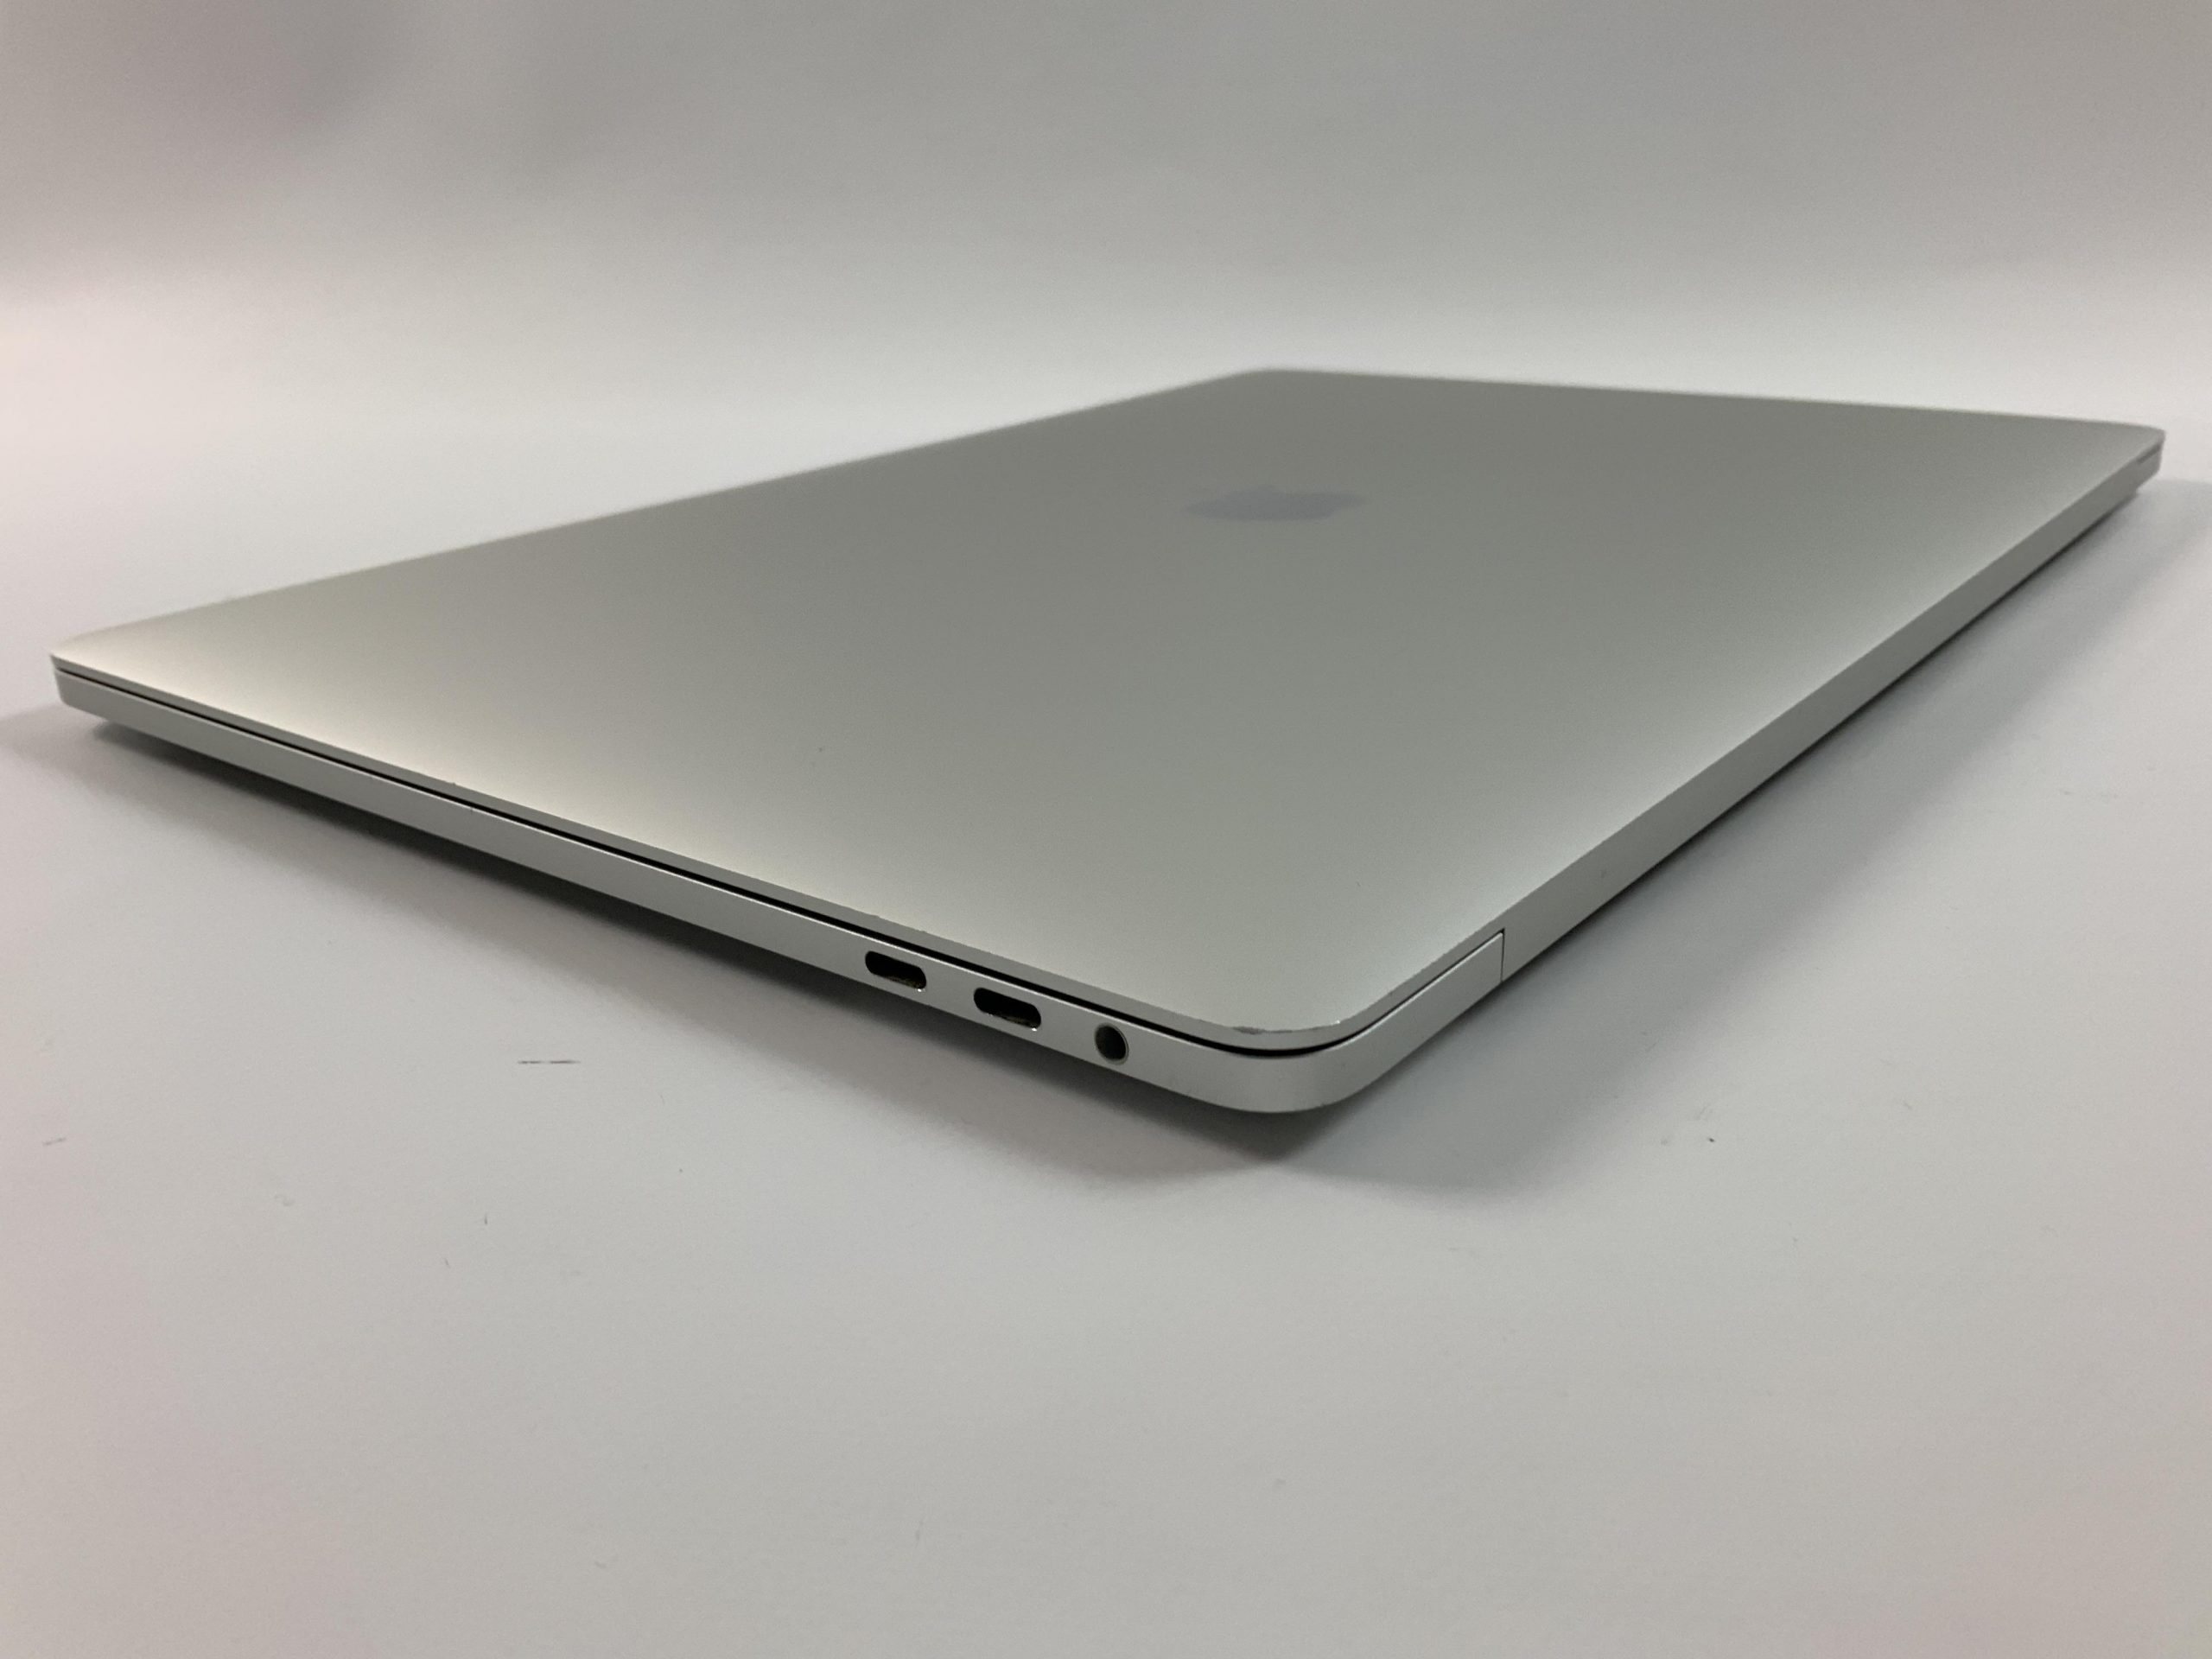 MacBook Pro 15" Touch Bar Mid 2017 (Intel Quad-Core i7 2.8 GHz 16 GB RAM 512 GB SSD), Silver, Intel Quad-Core i7 2.8 GHz, 16 GB RAM, 512 GB SSD, imagen 5